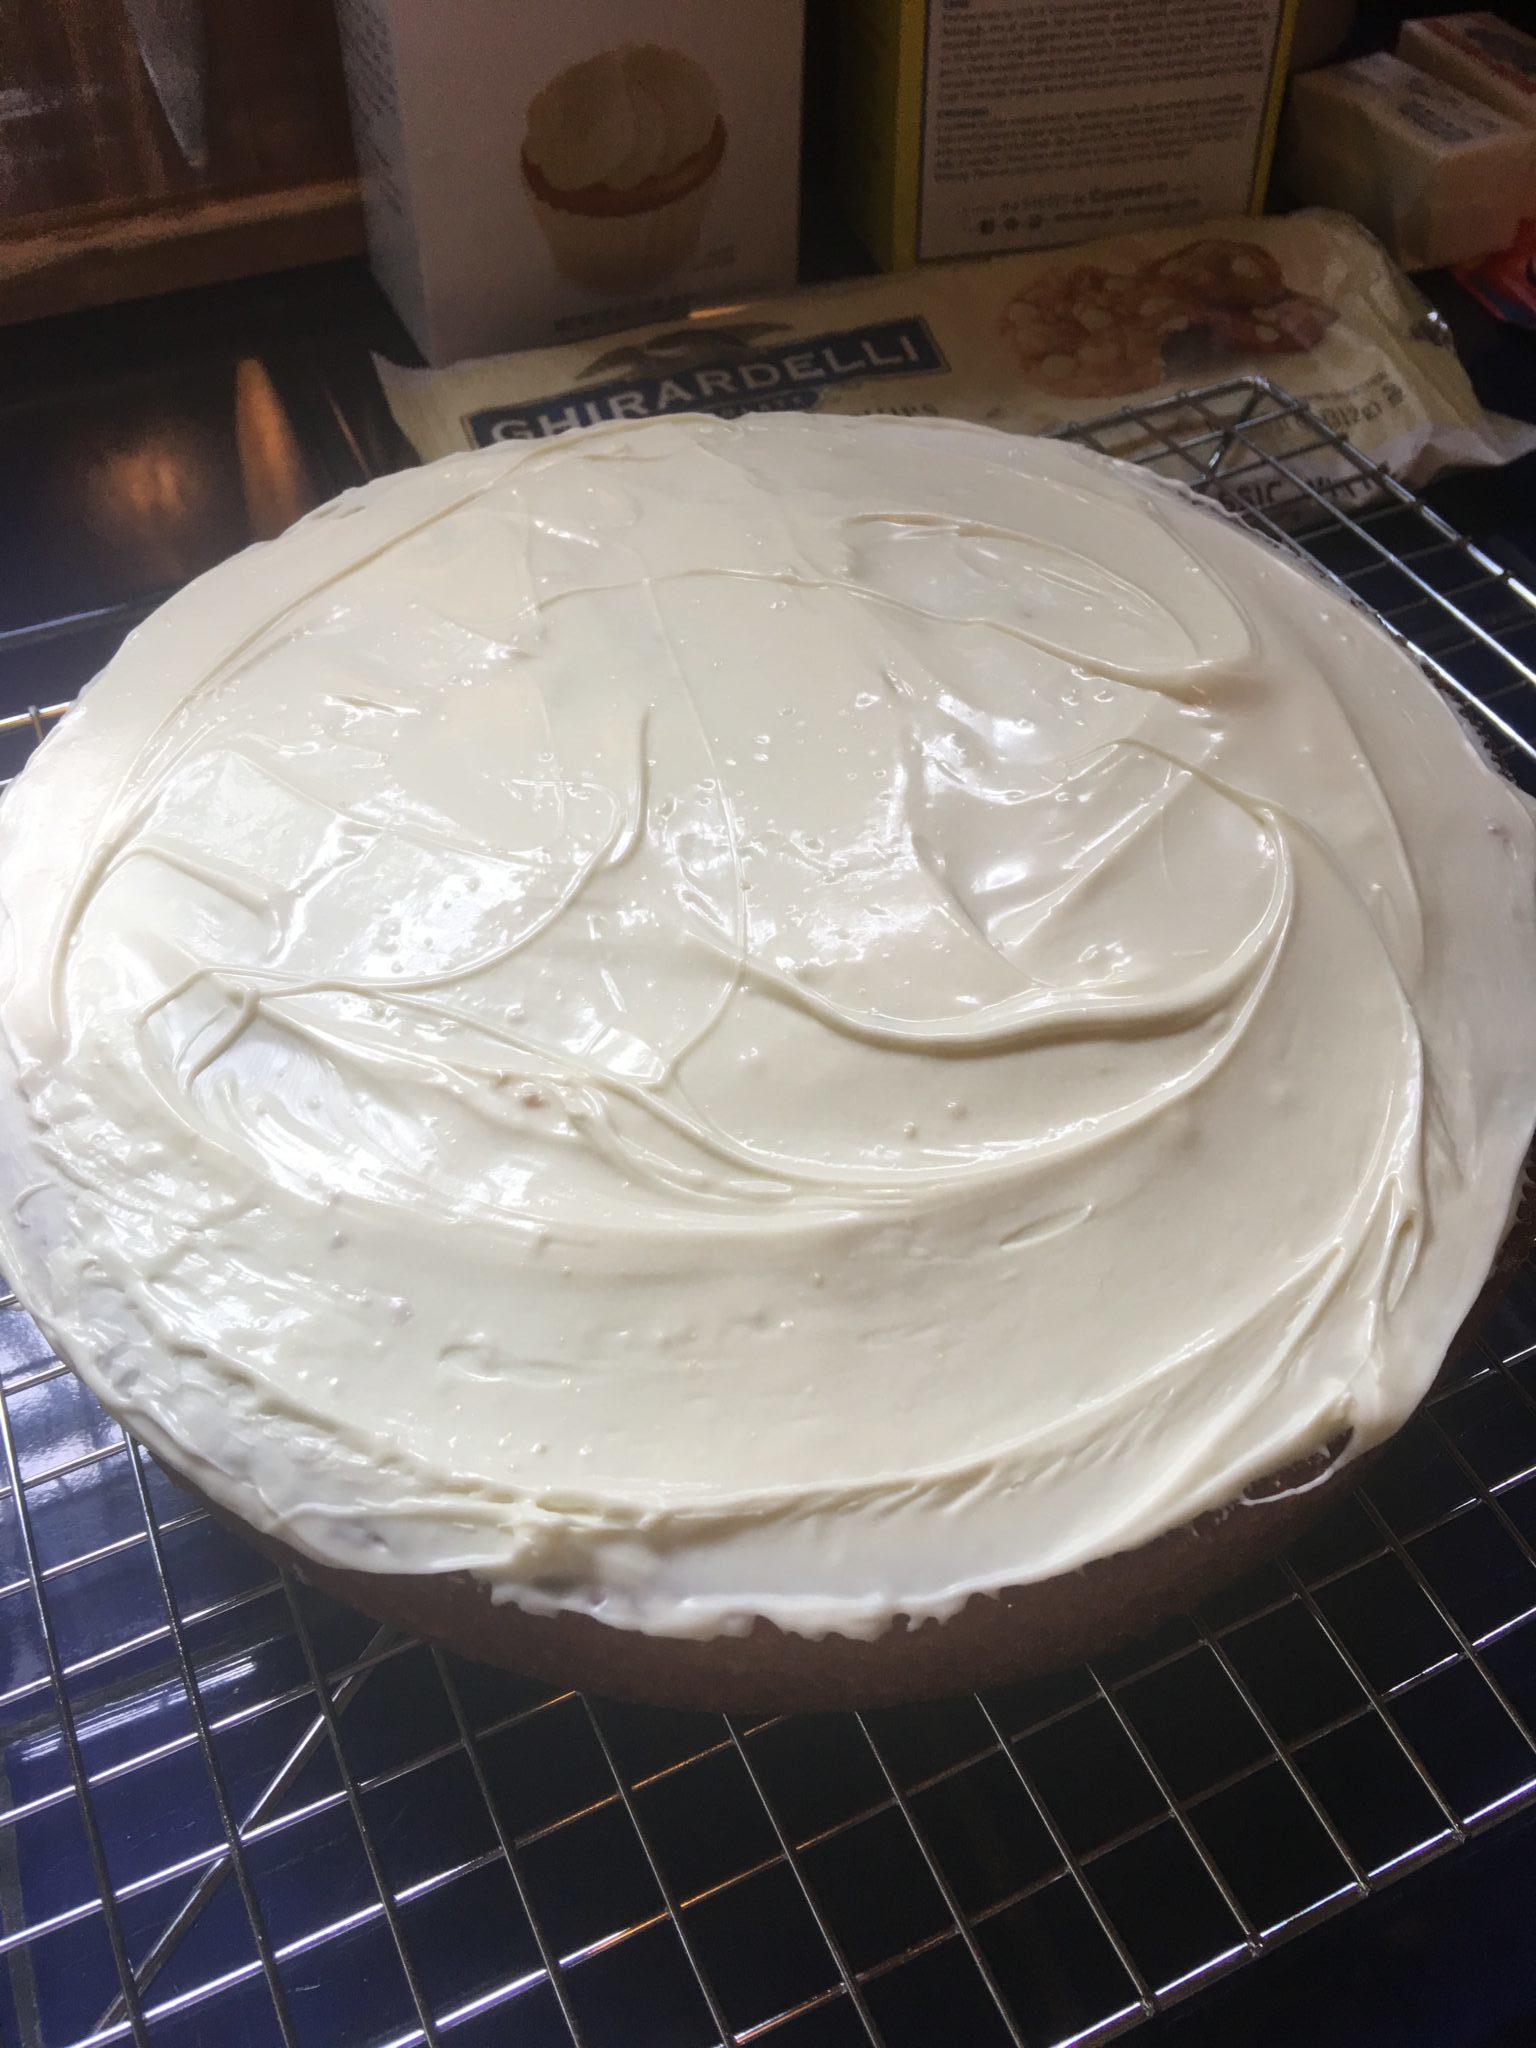 White chocolate topped cake